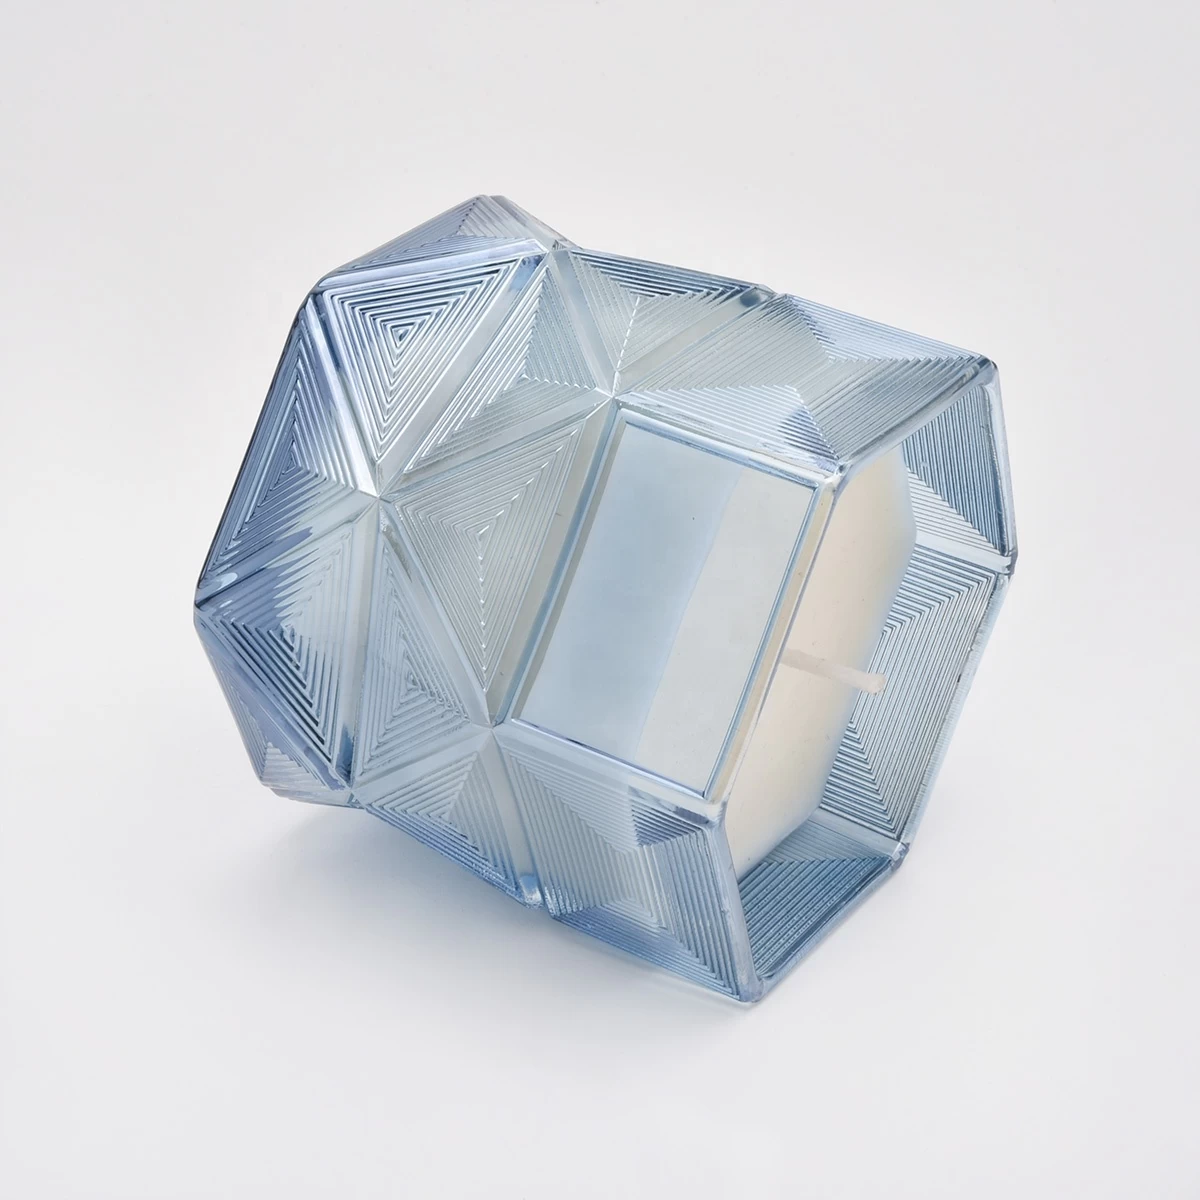 Sunny patent design luxury hexagon empty glass candle jars